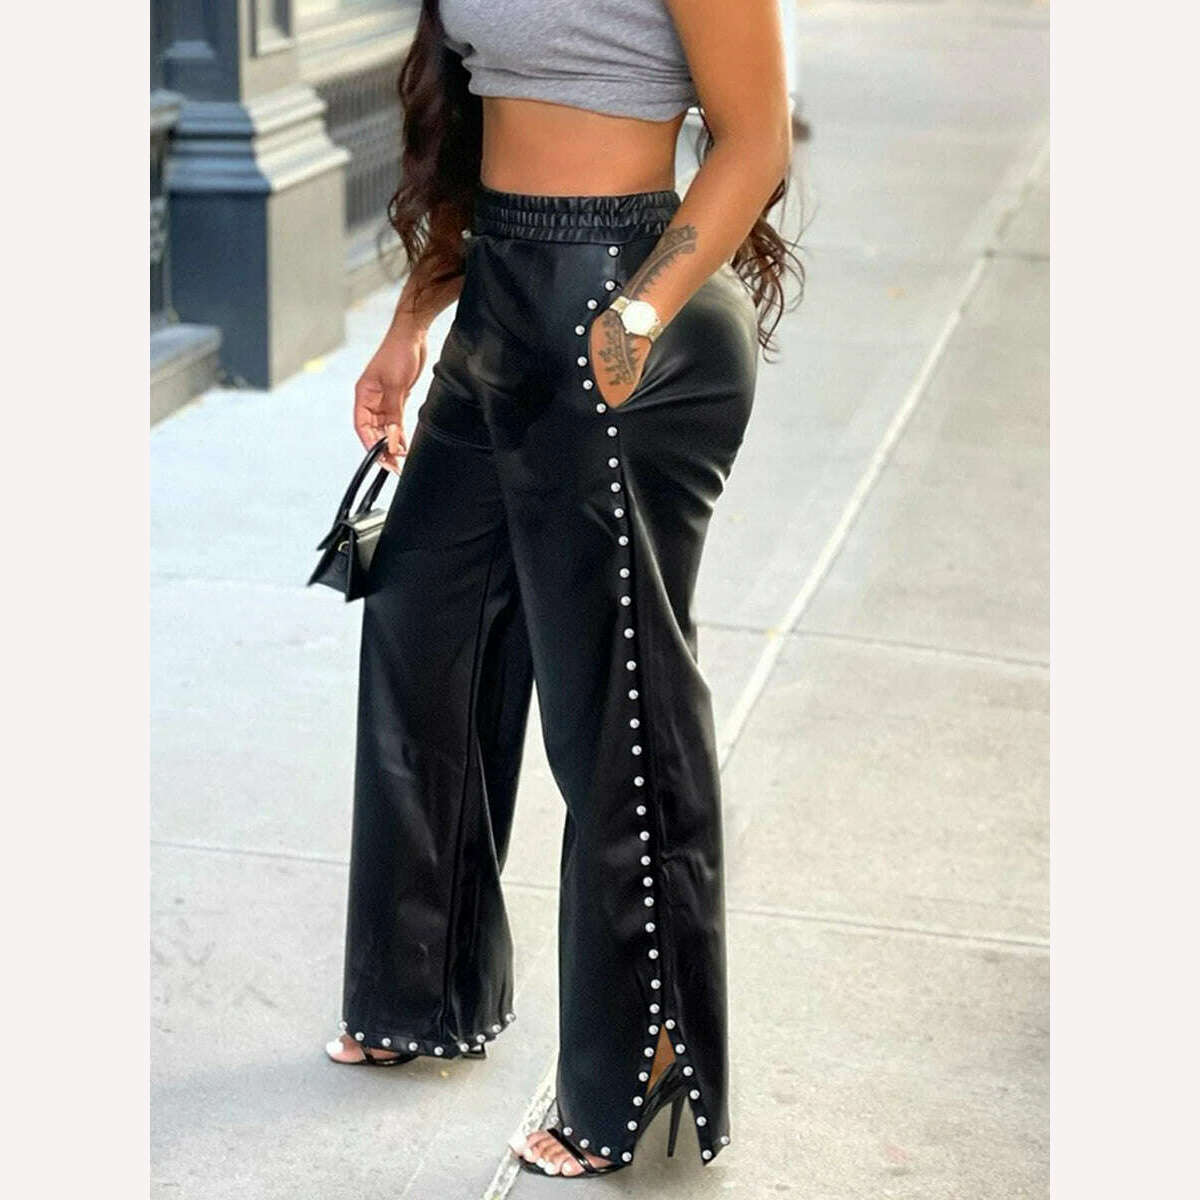 KIMLUD, Black PU Leather Pants Pocket Metal Decoration Loose Slit Wide Leg Pant Fashion Street Trend Women's Casual Bottoms, black / S / CHINA, KIMLUD Women's Clothes